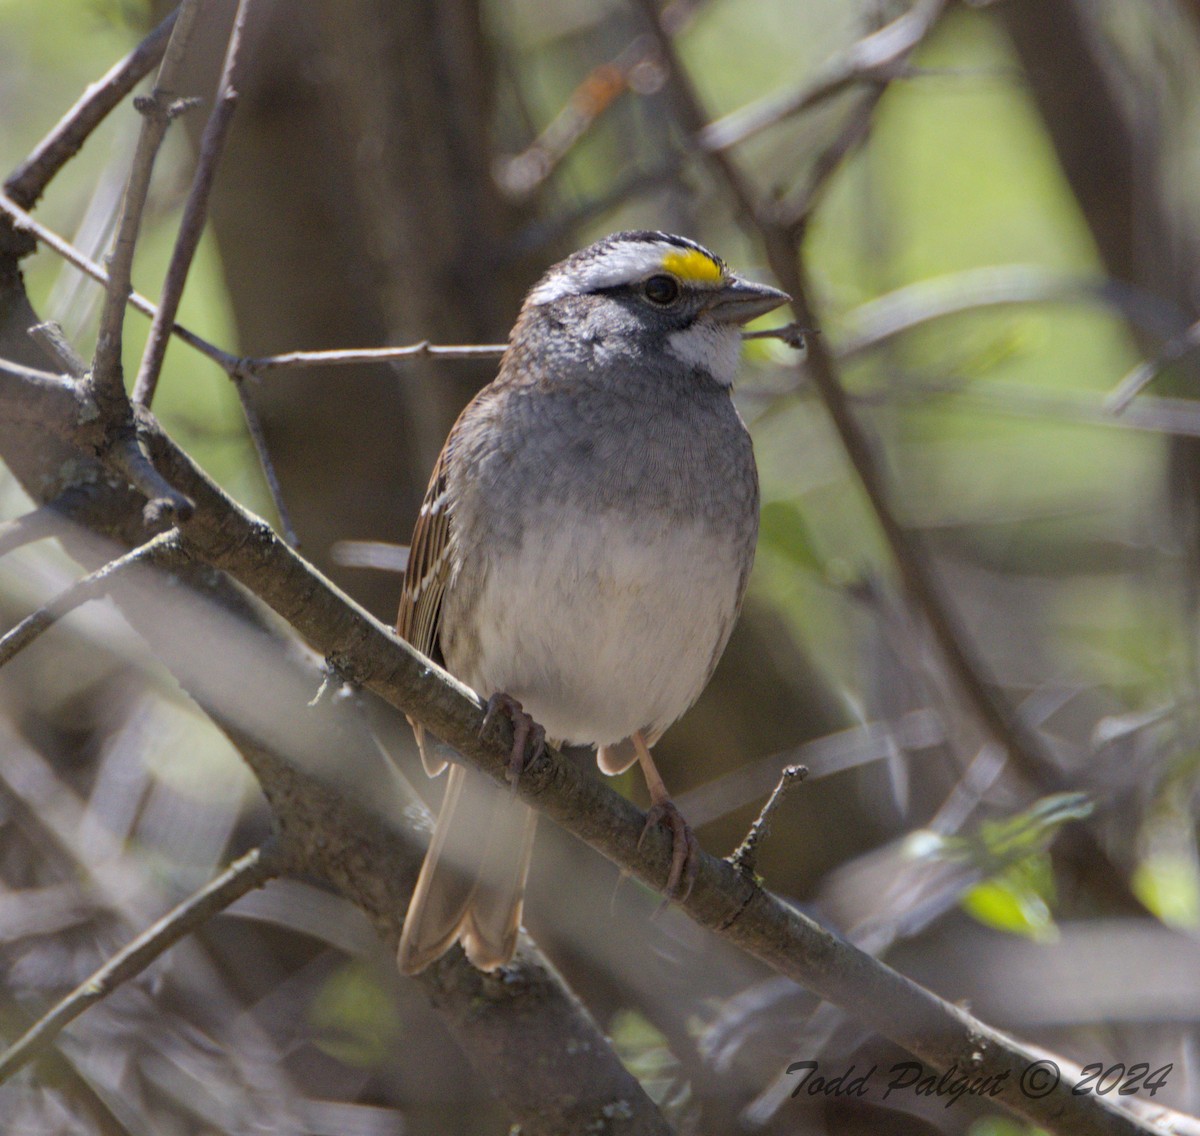 White-throated Sparrow - t palgut